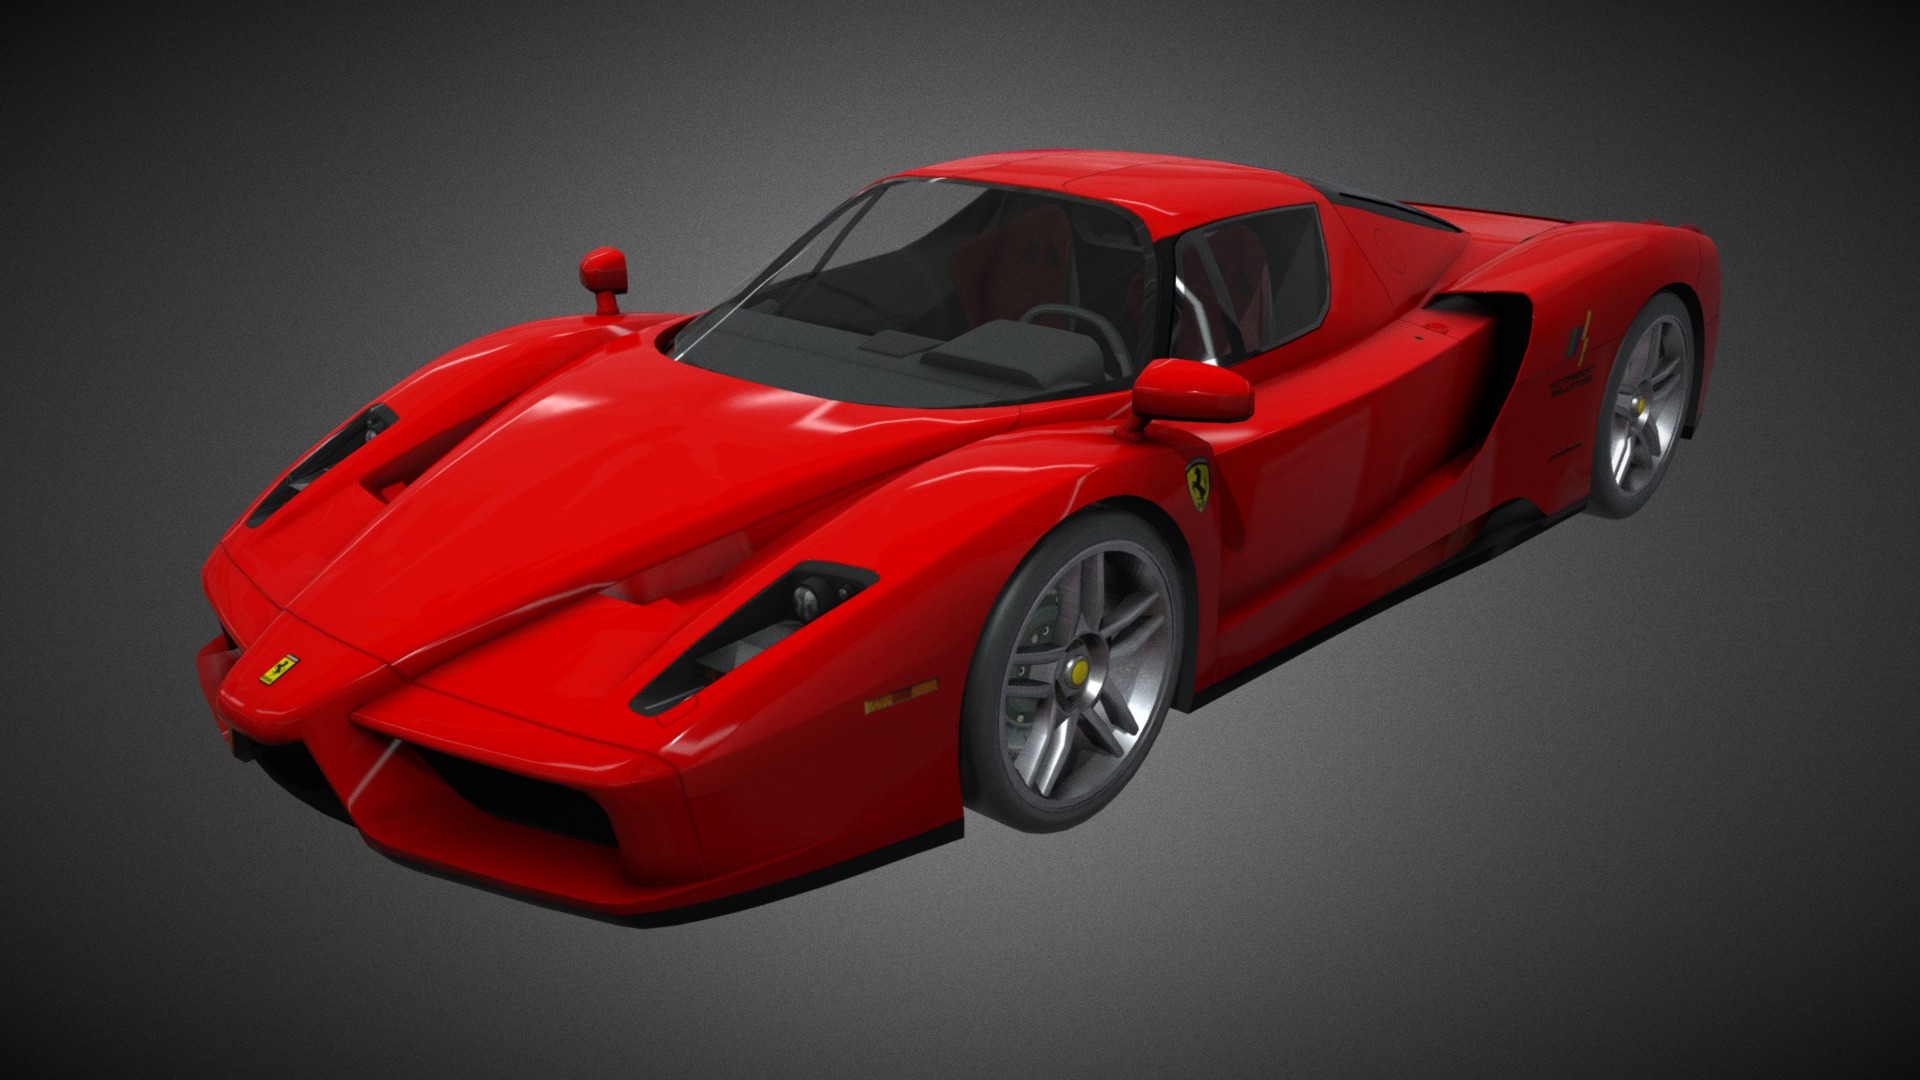 3D model Ferrari Enzo - This is a 3D model of the Ferrari Enzo. The 3D model is about a red sports car.